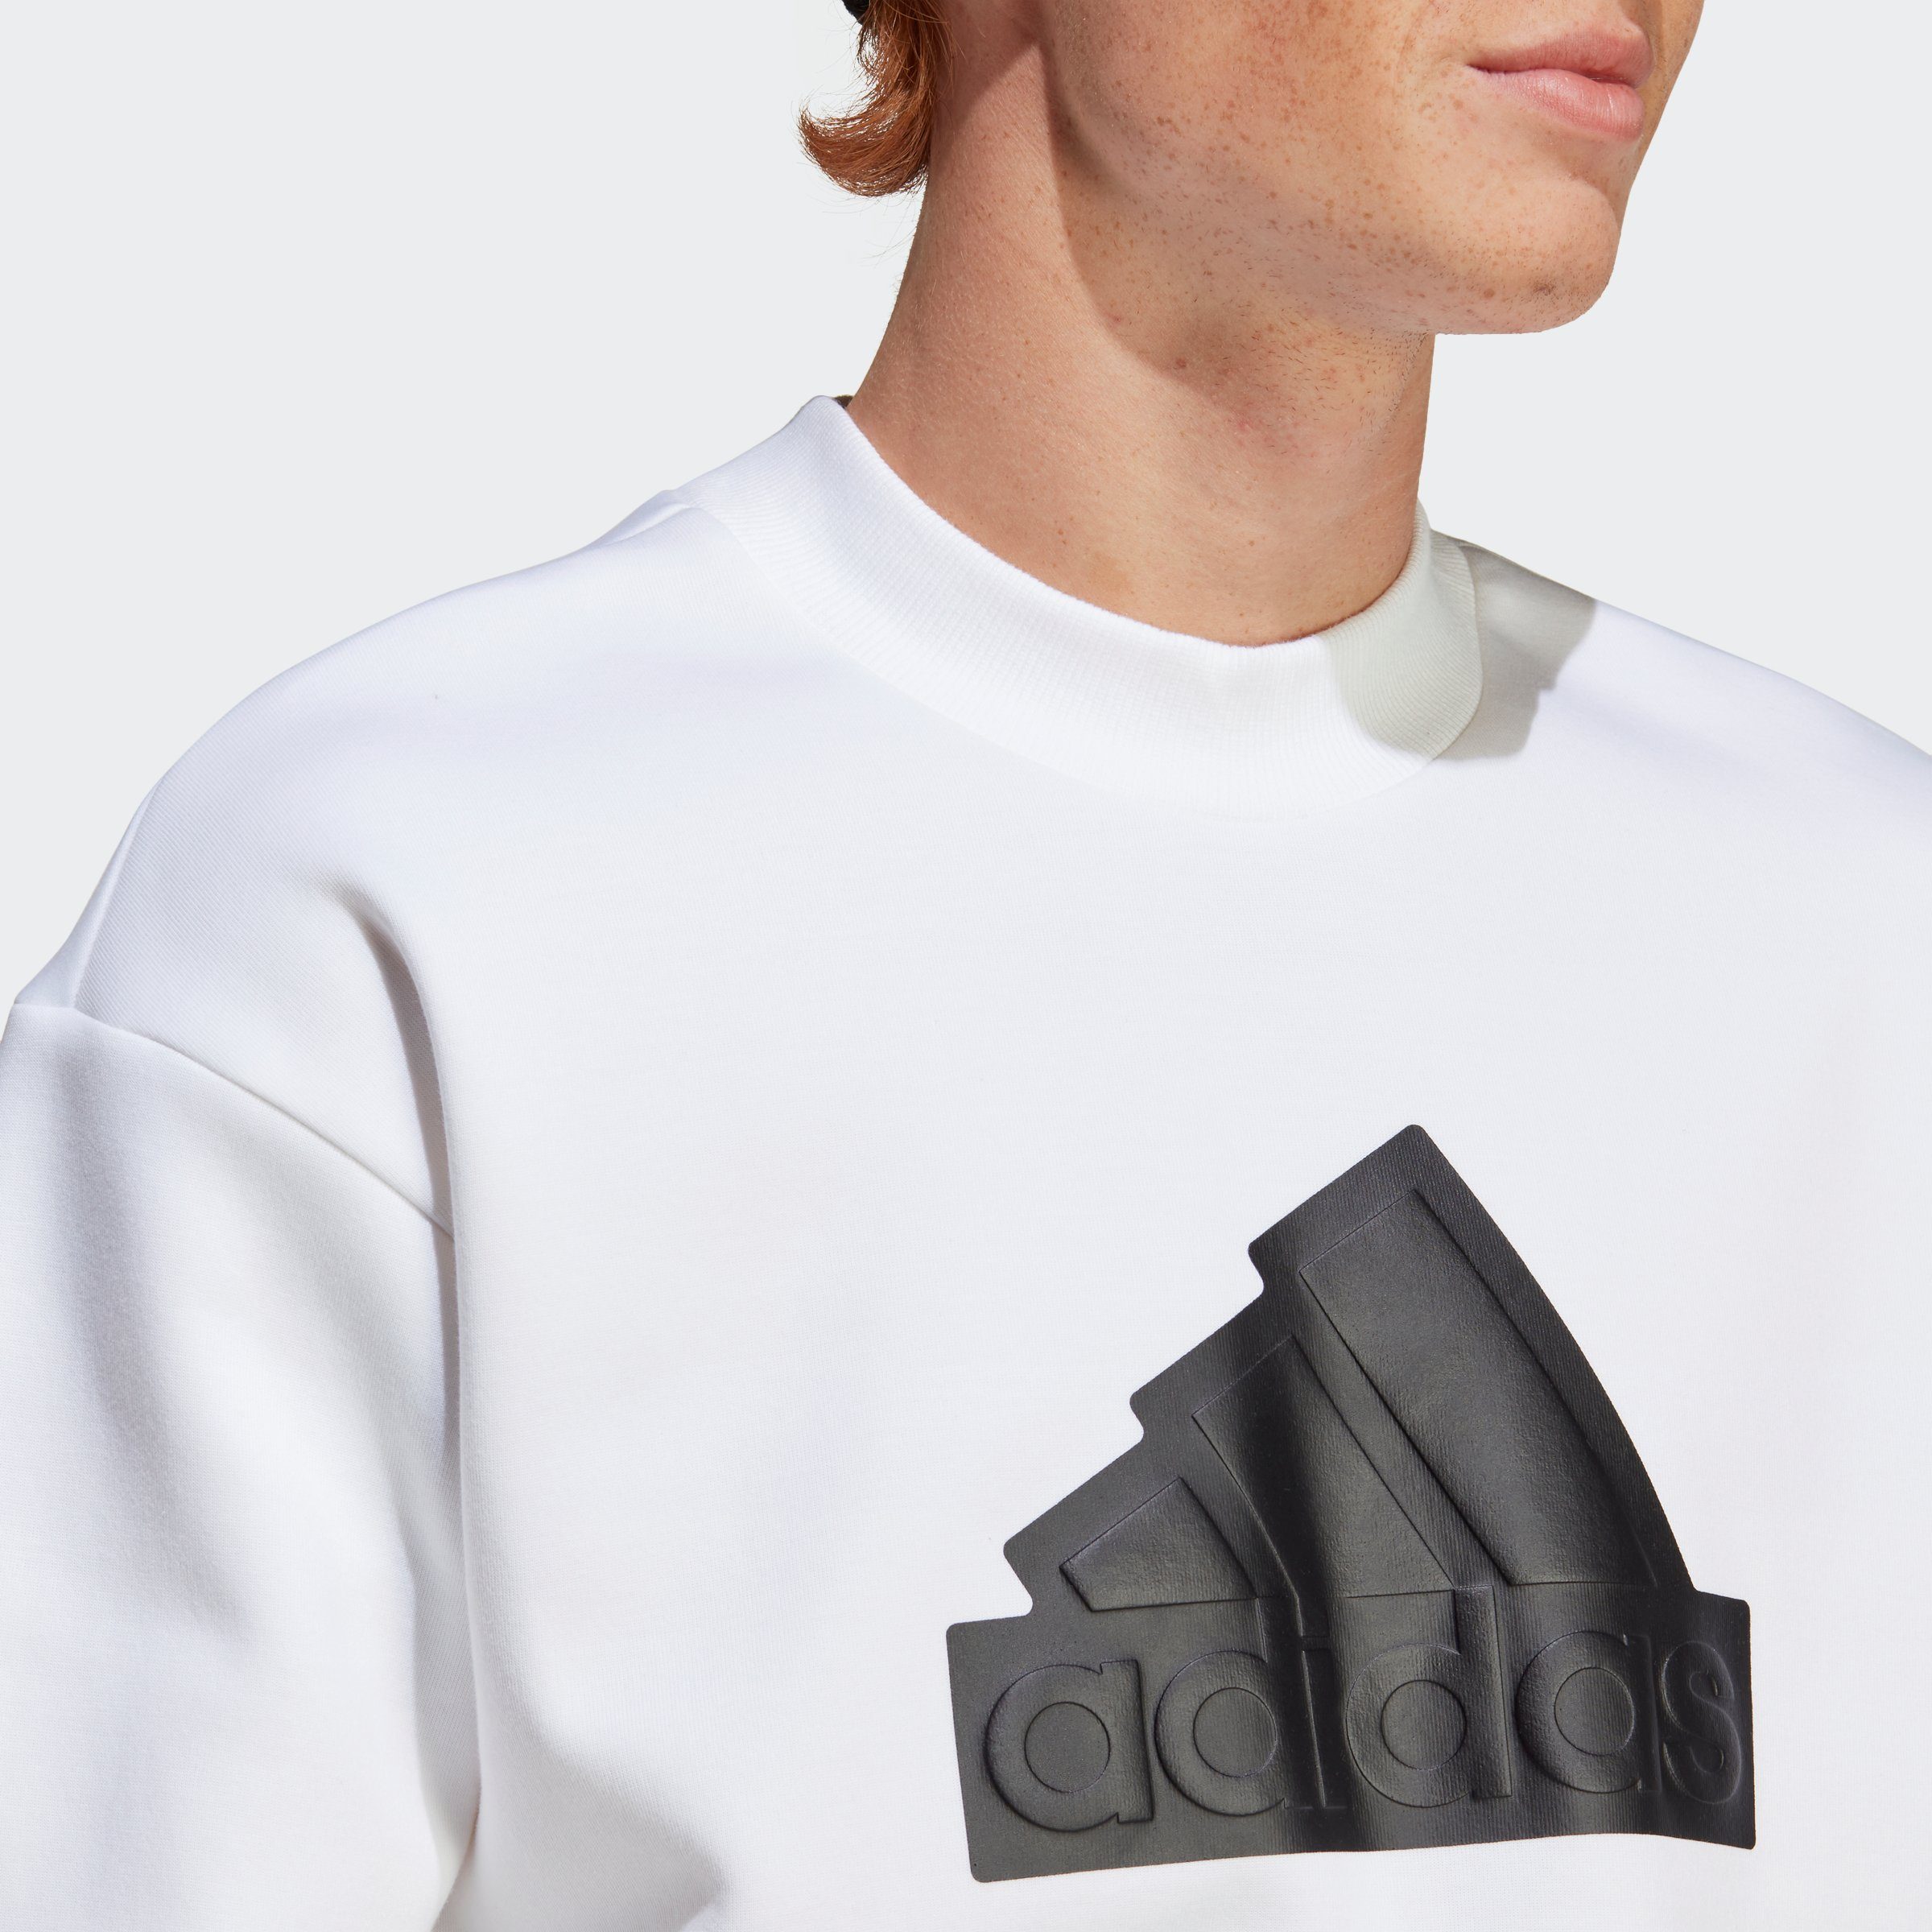 FUTURE SPORT OF White Sportswear Sweatshirt Black ICONS adidas BADGE /